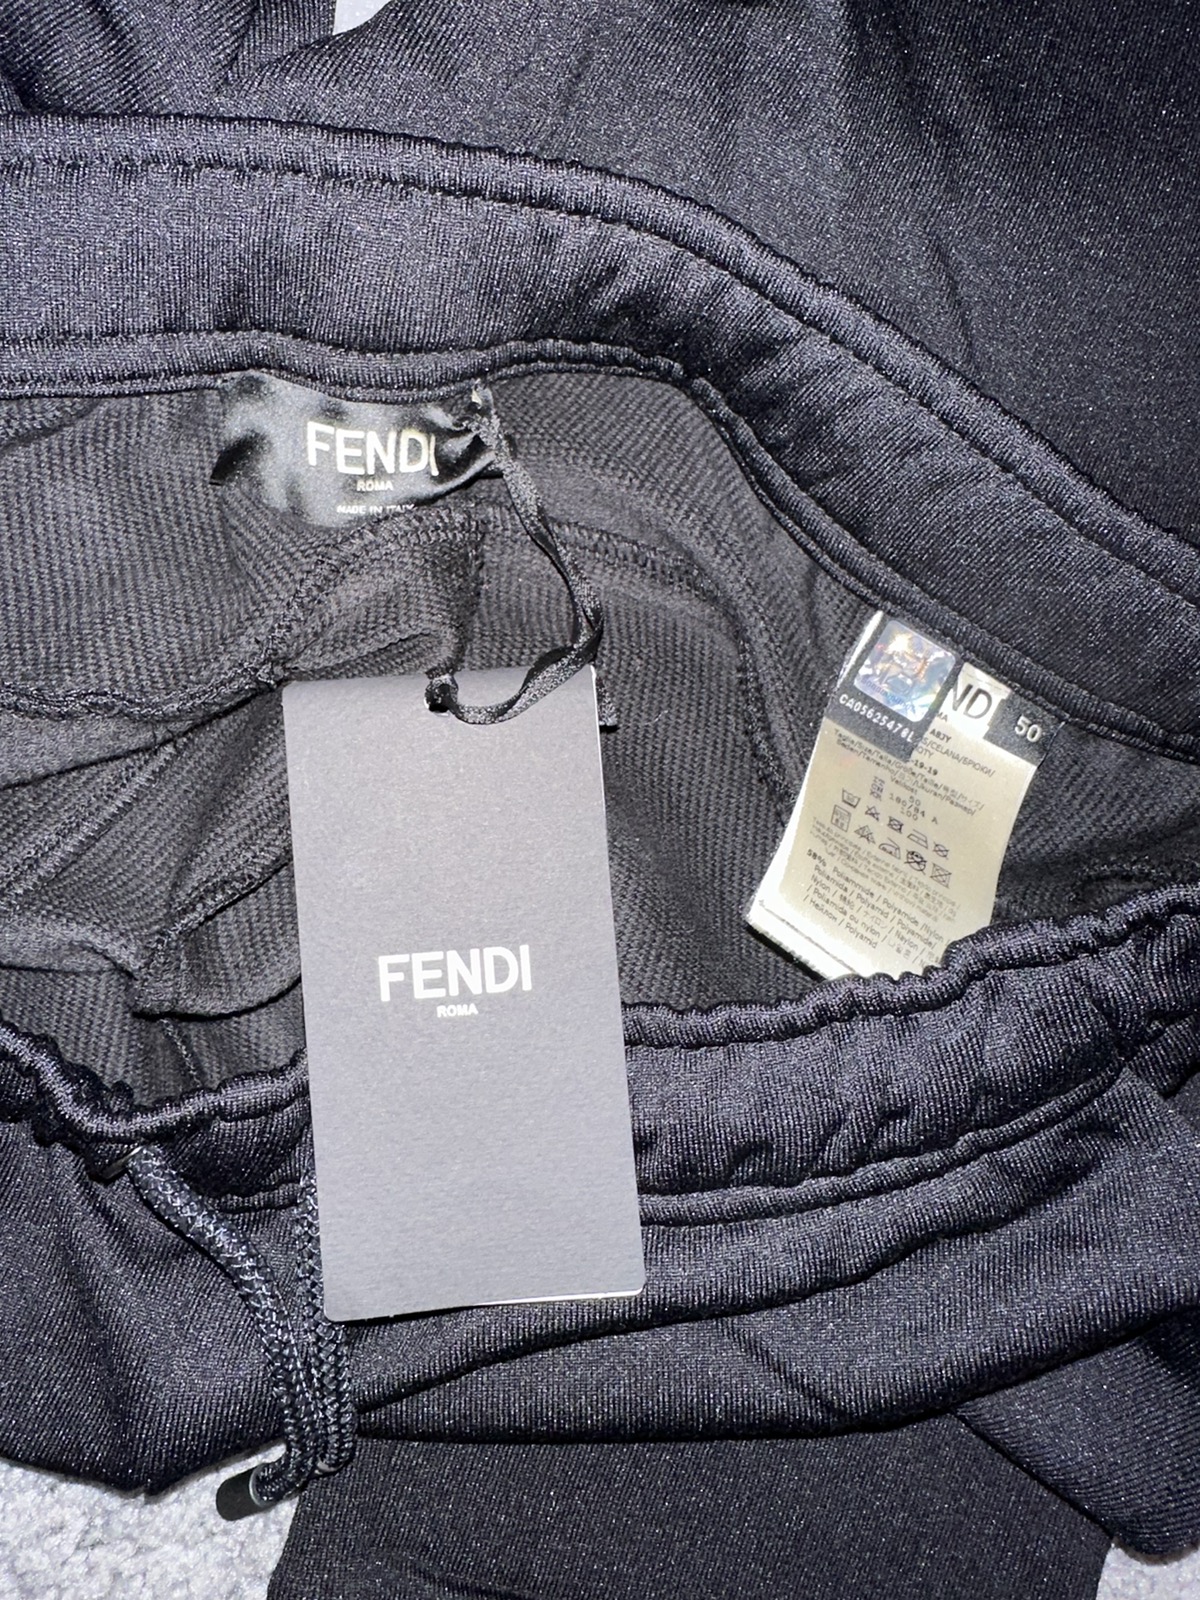 Fendi Mesh Logo Sweatpants - Size 50 - Brand New With Tags! - 8